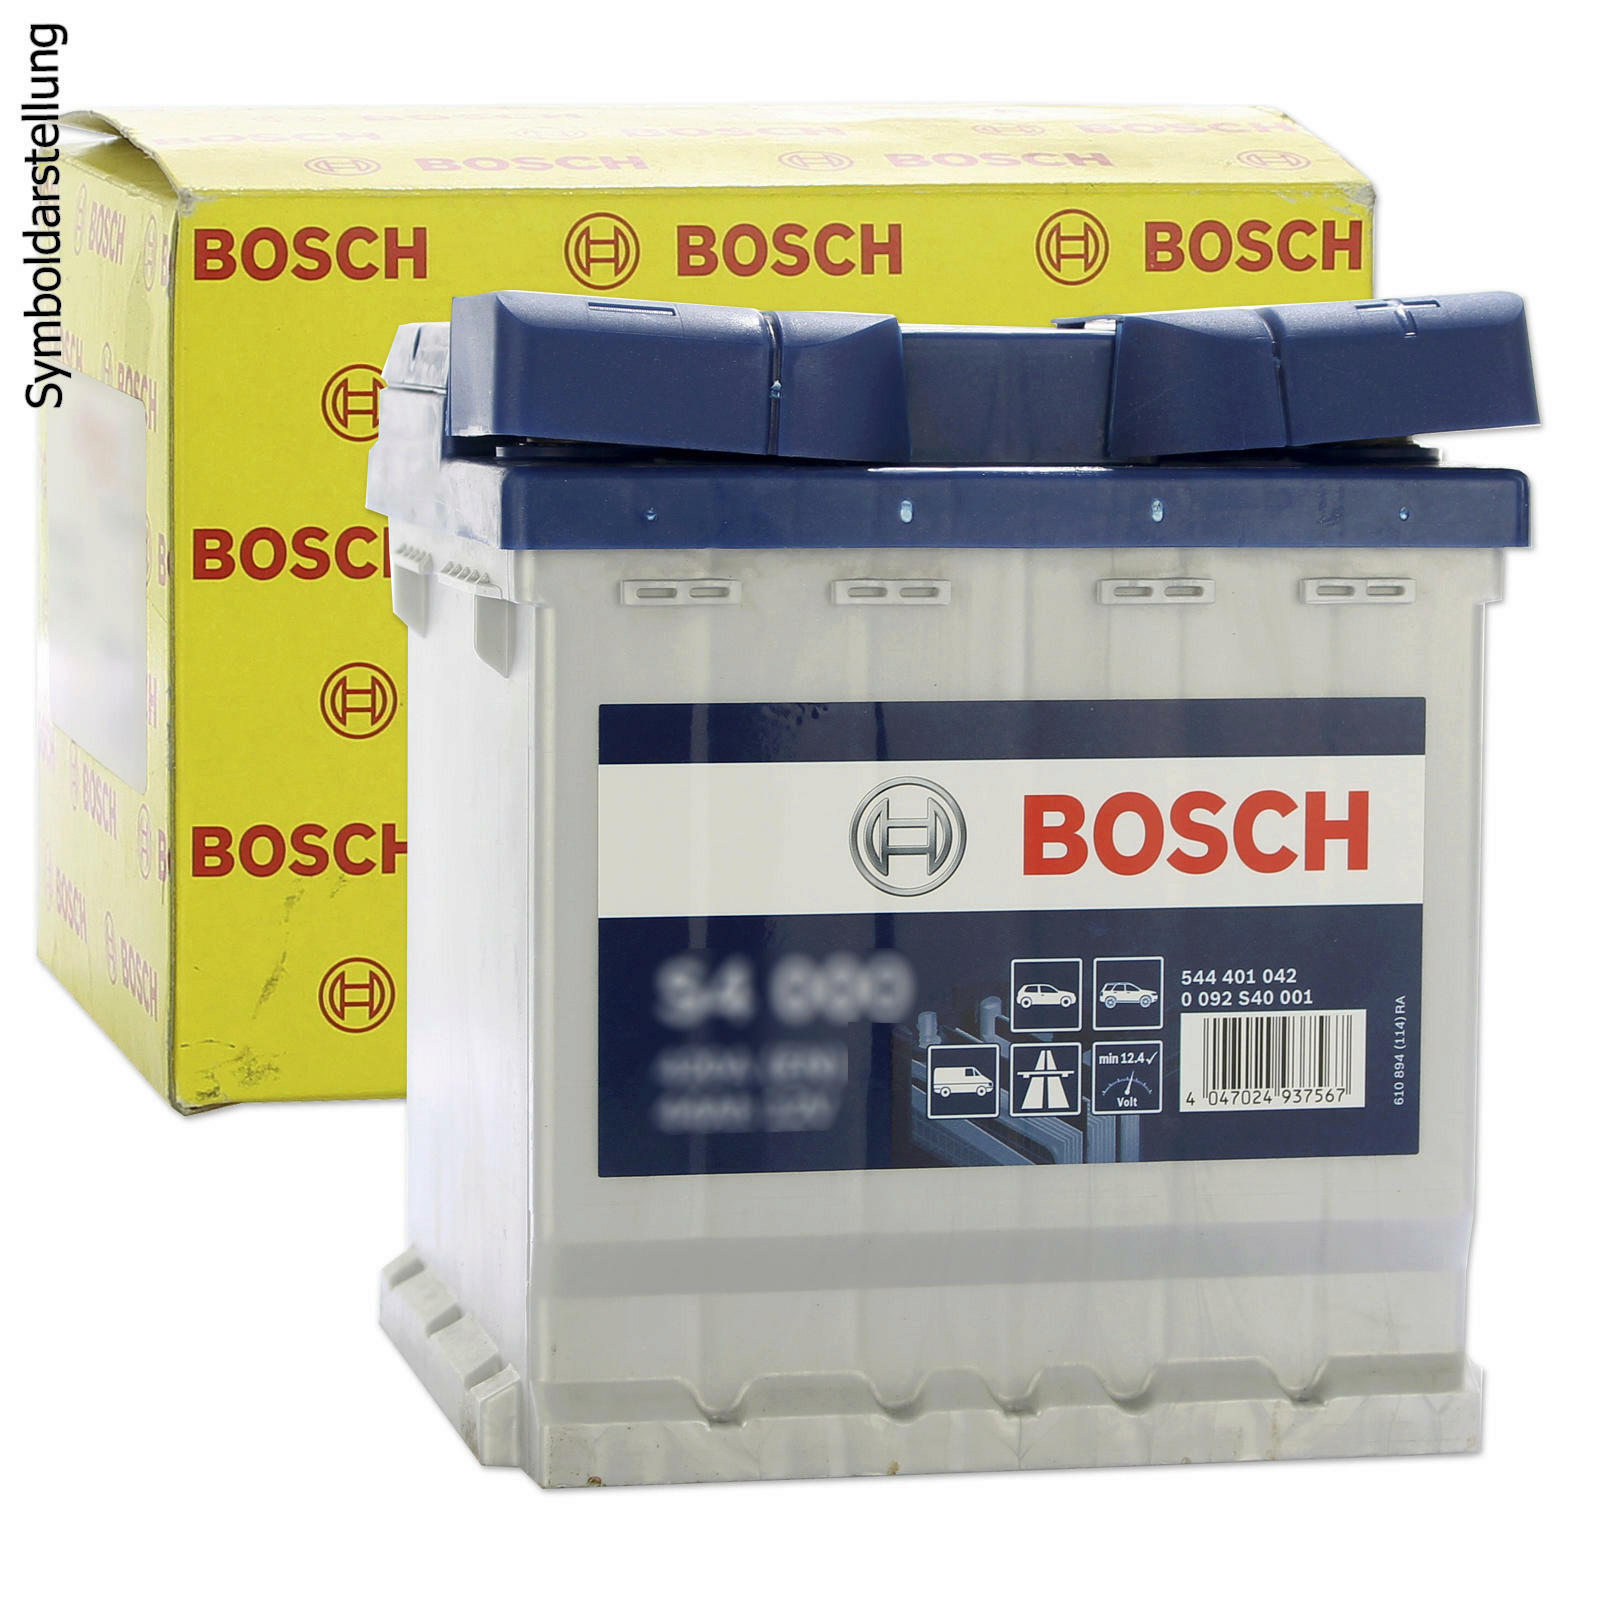 BOSCH Starter Battery S5